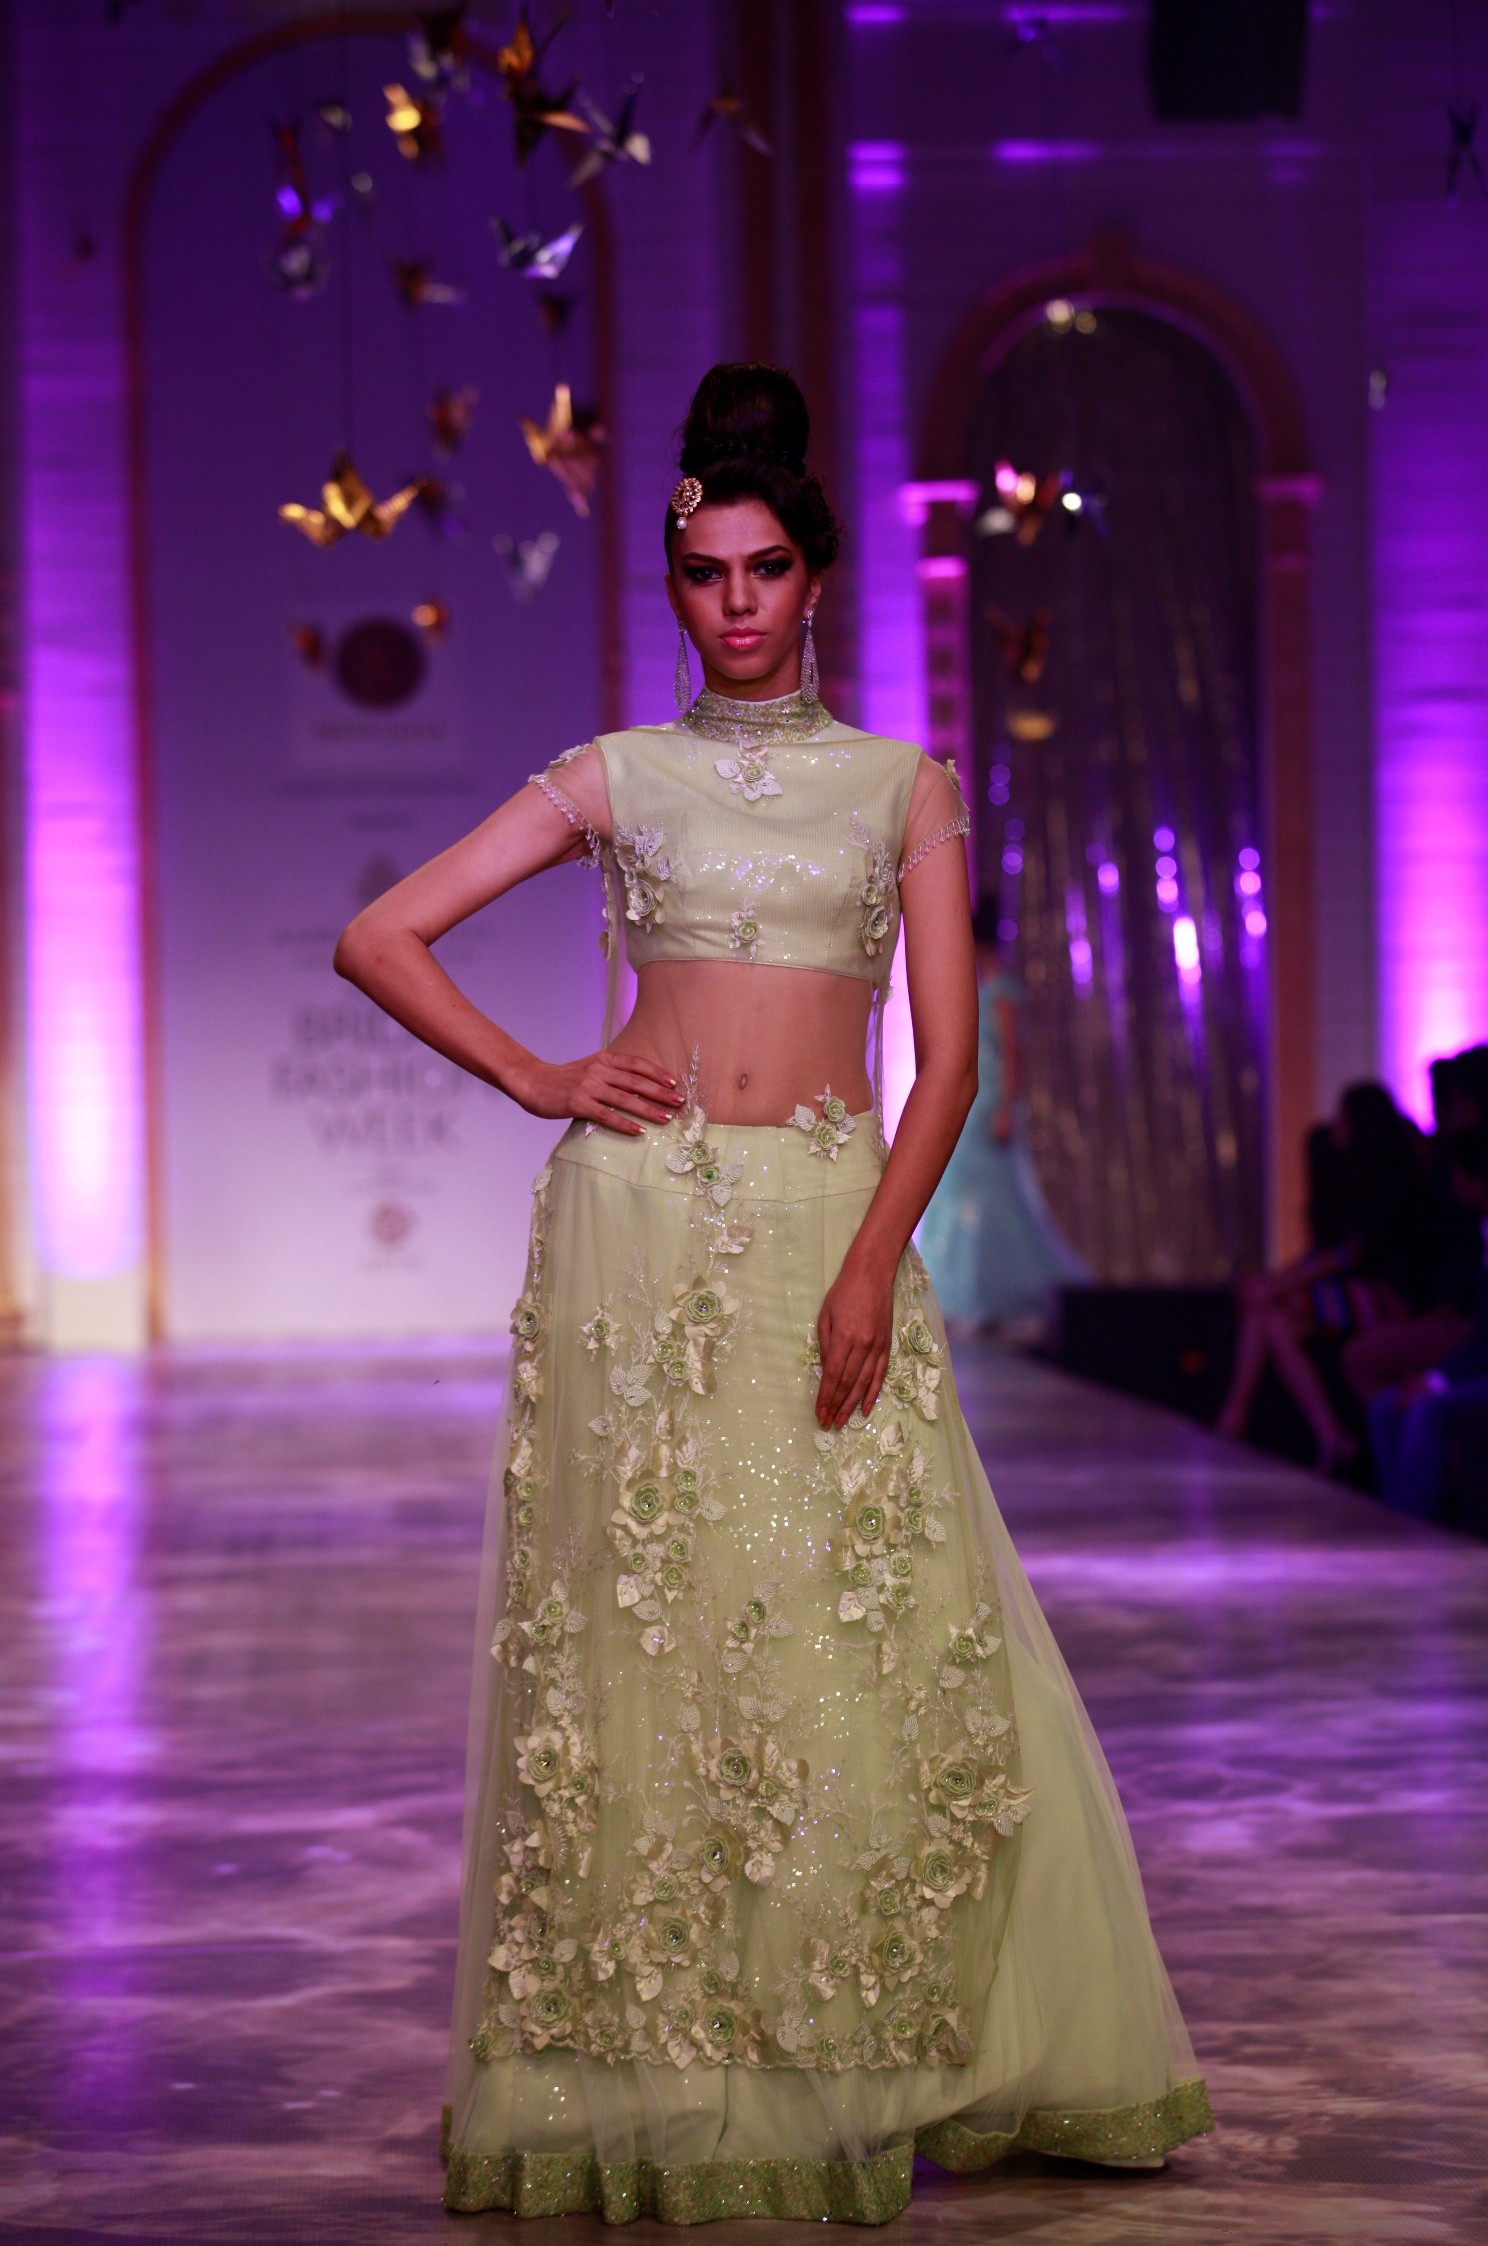 Seen at Aamby Valley India Bridal Fashion Week - Model walking for Neeta Lulla